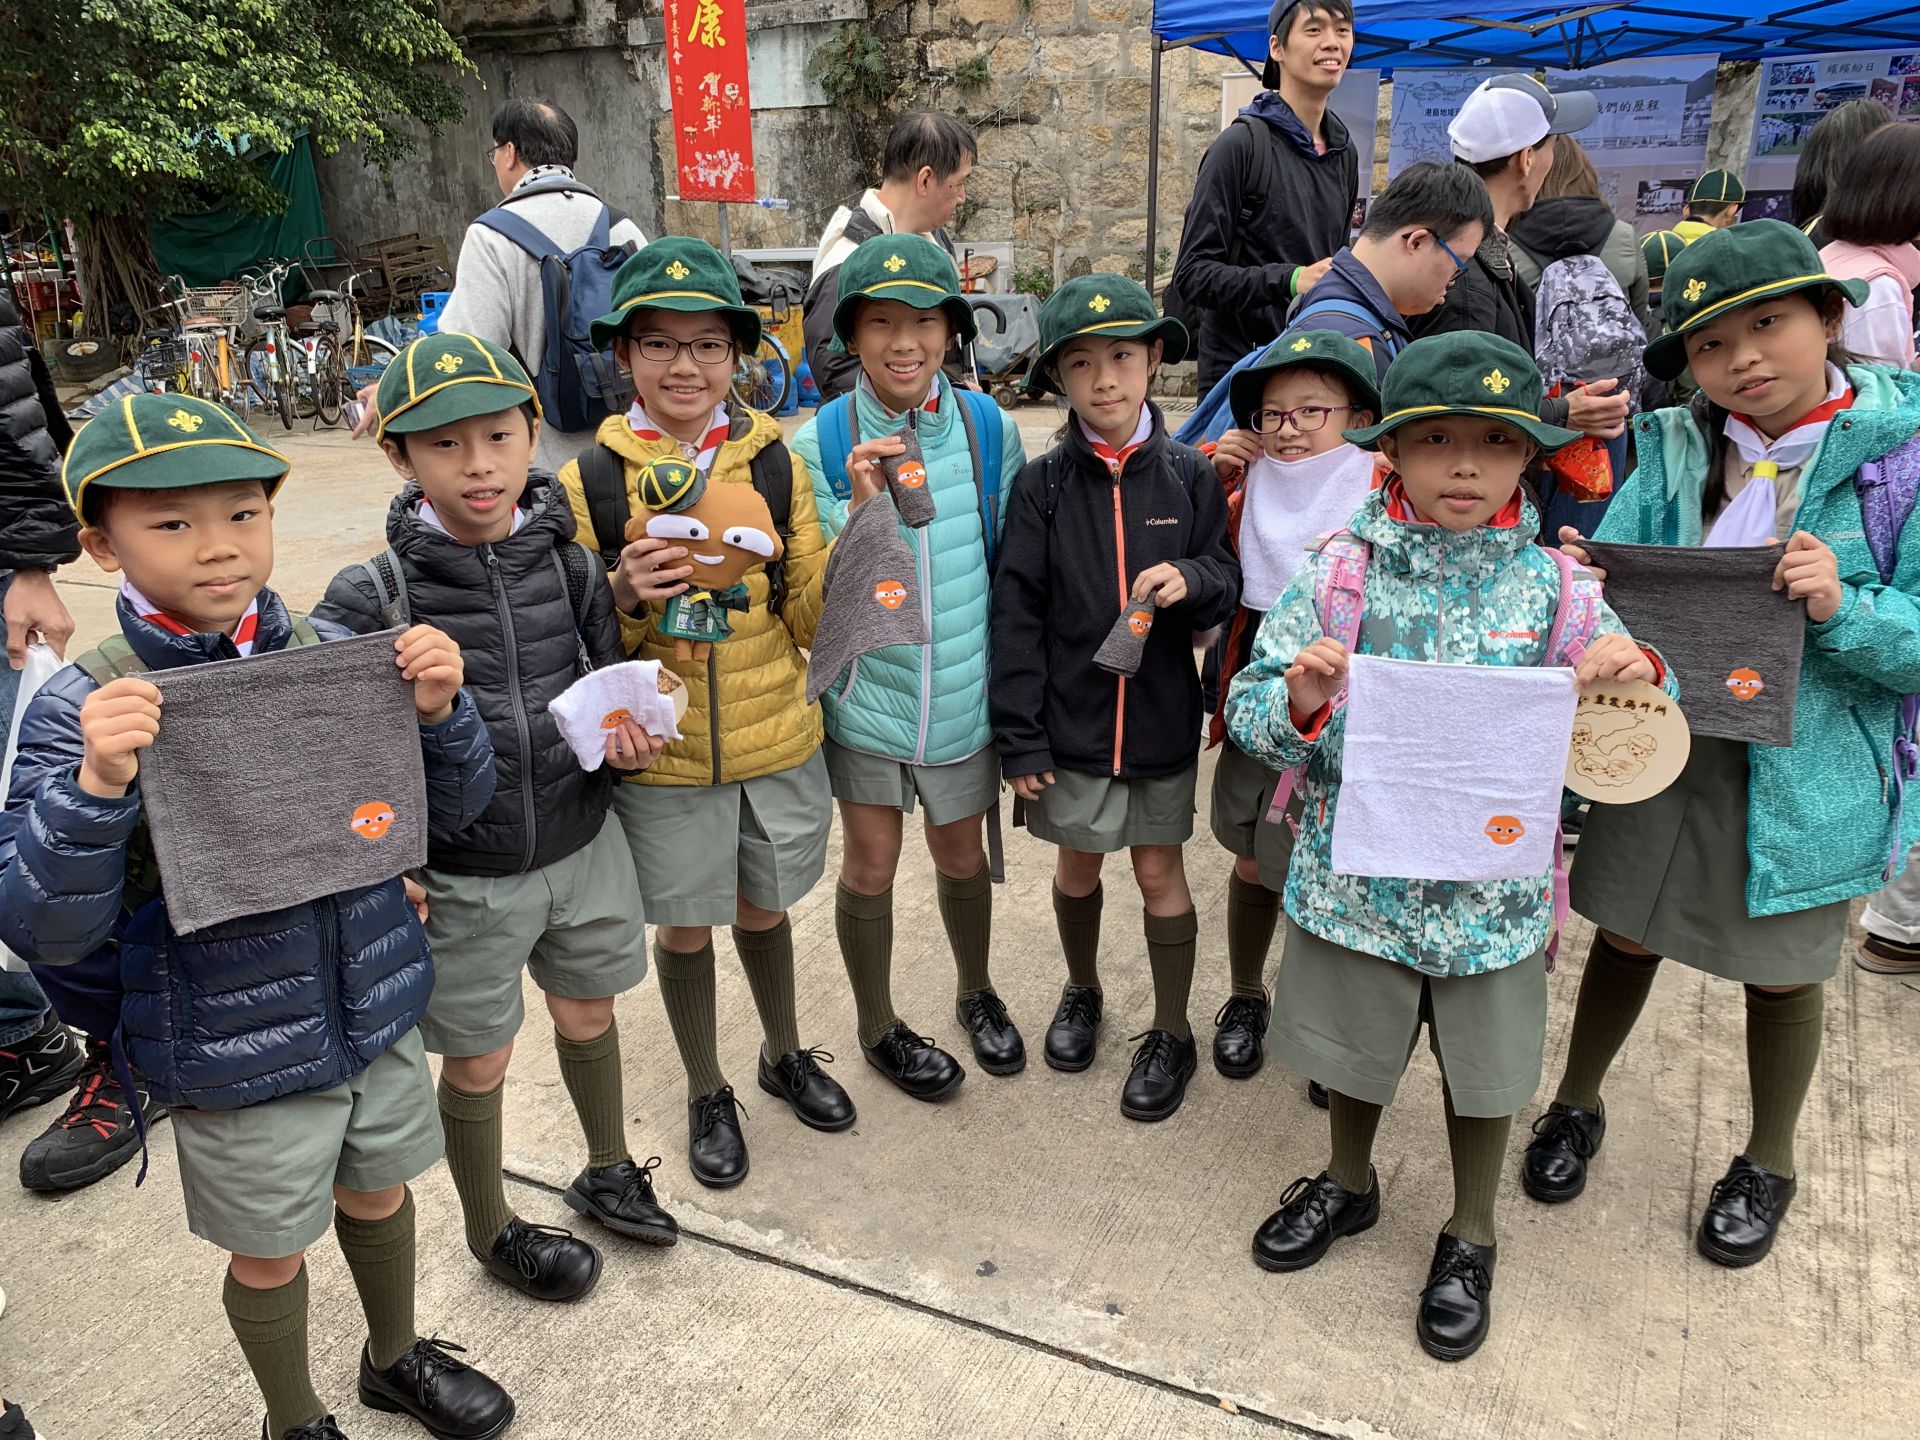 Scout Association of Hong Kong at Peng Chau